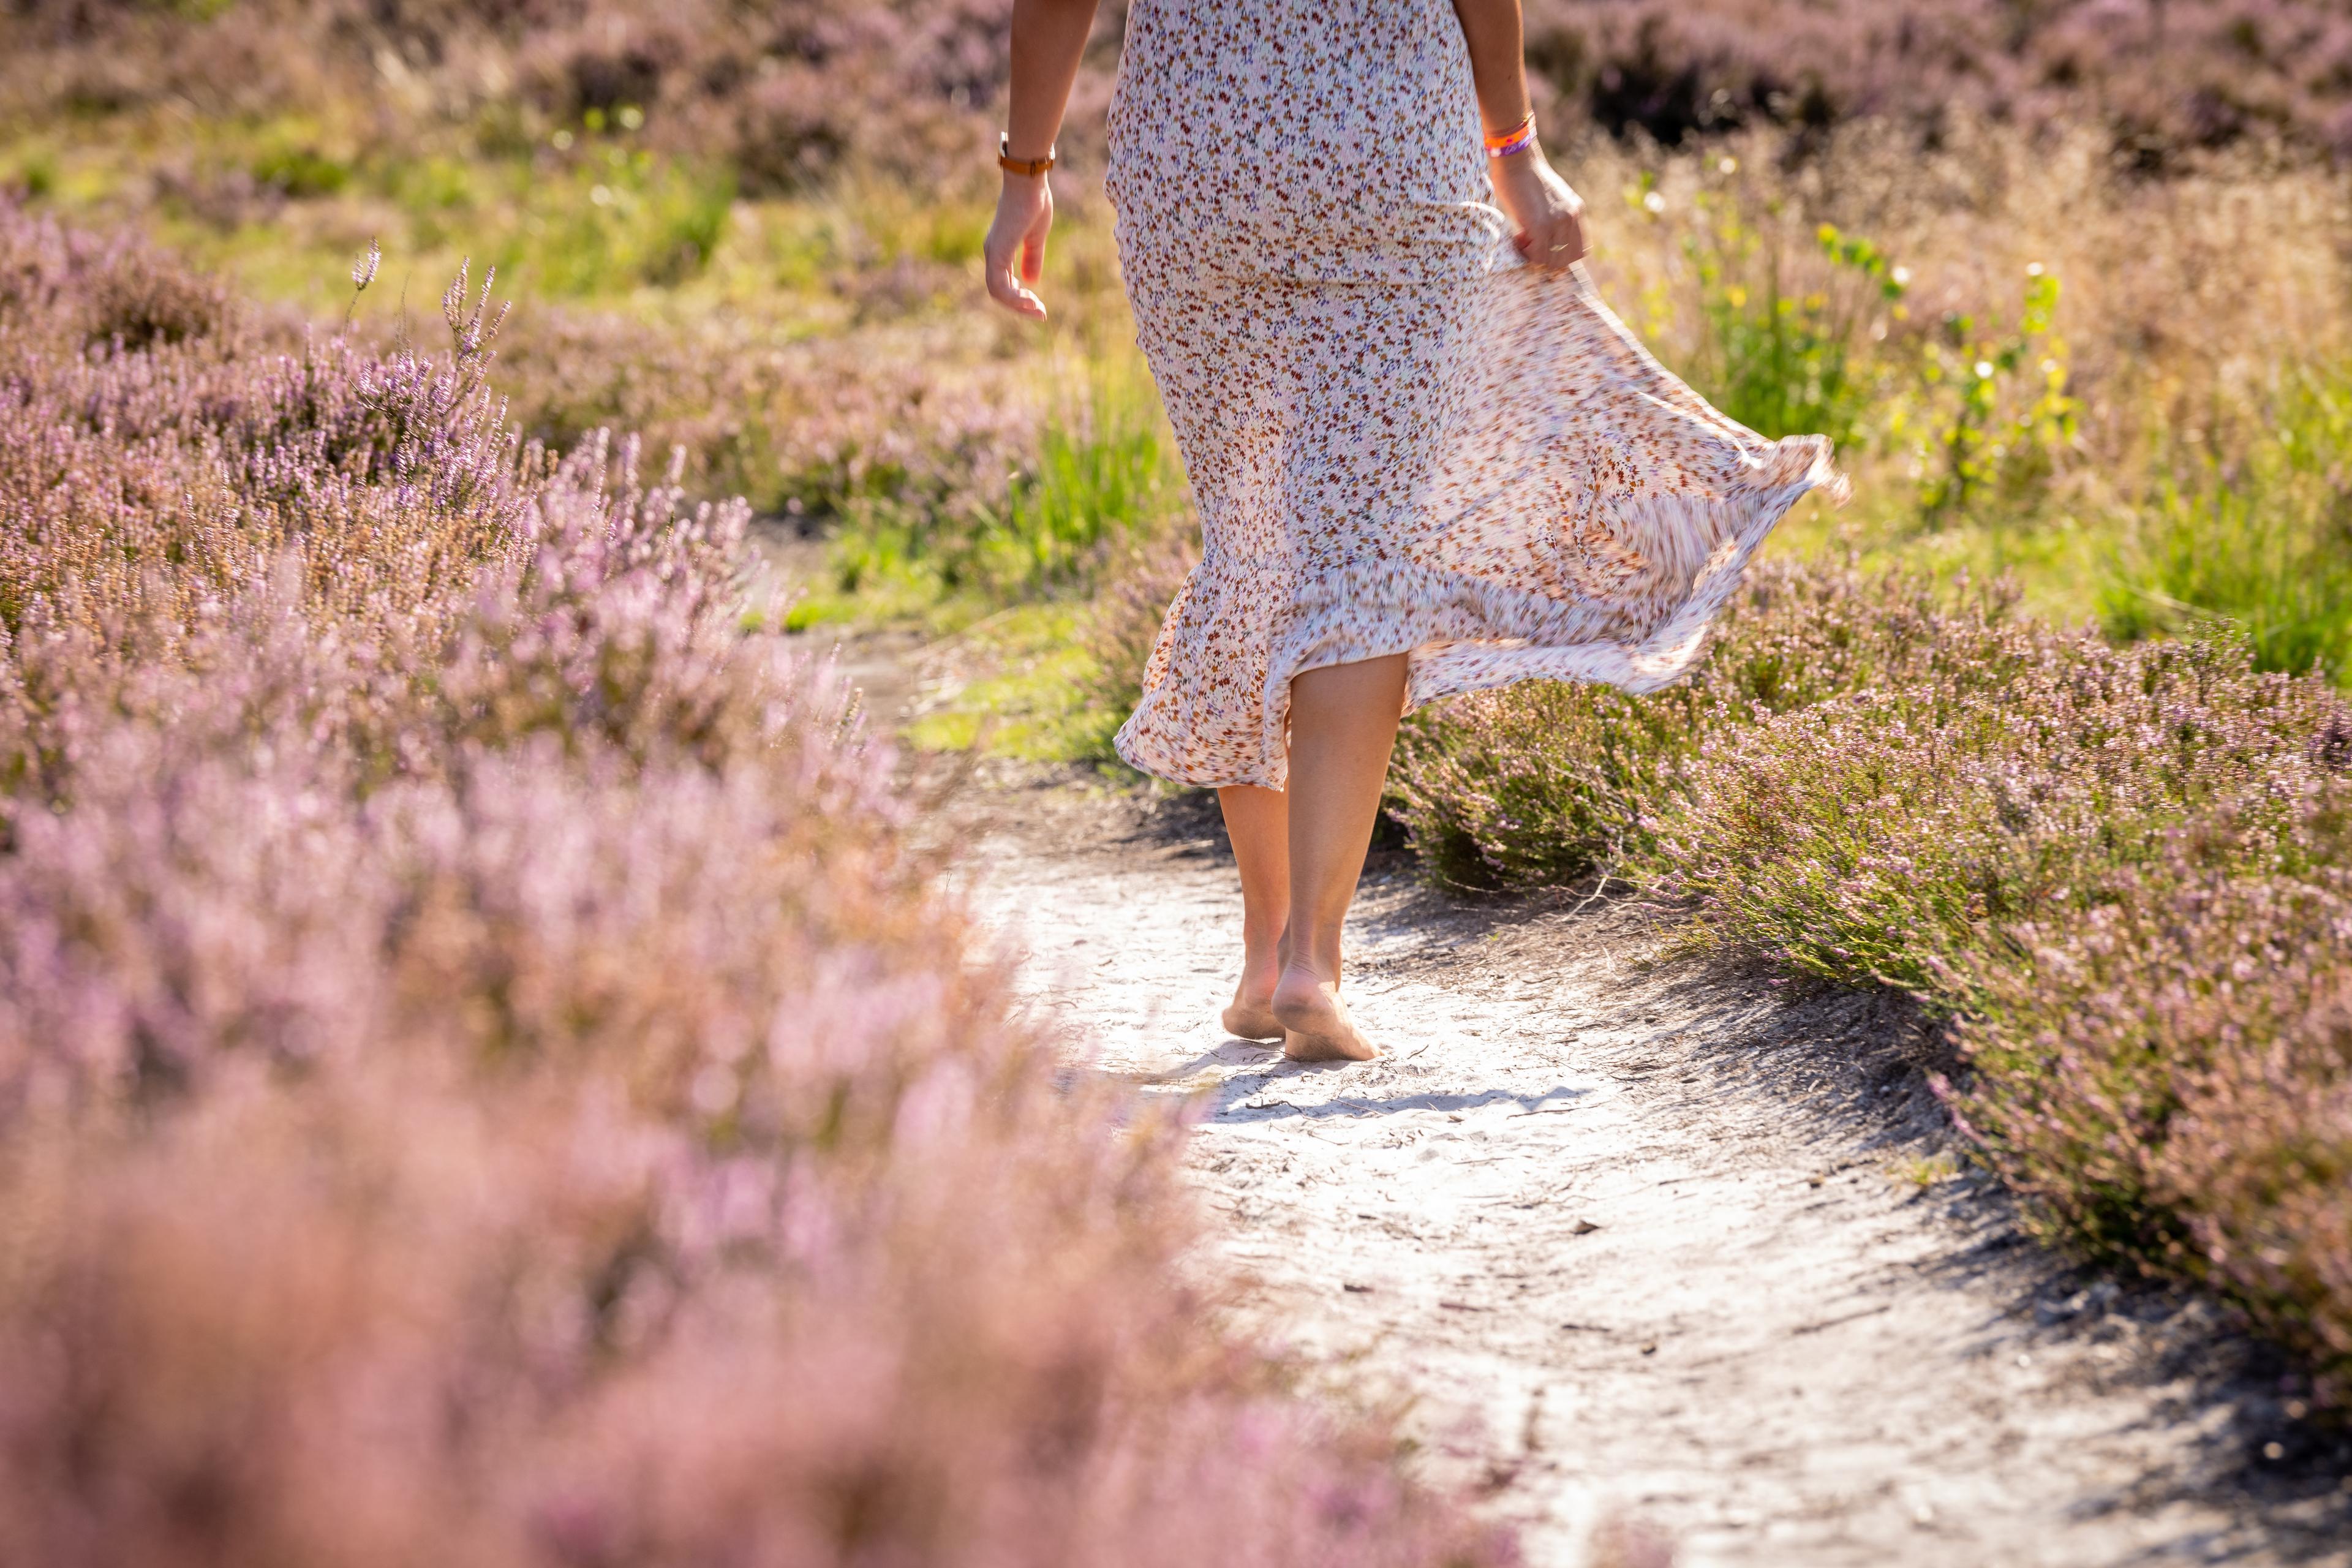 Walking barefoot through the heath